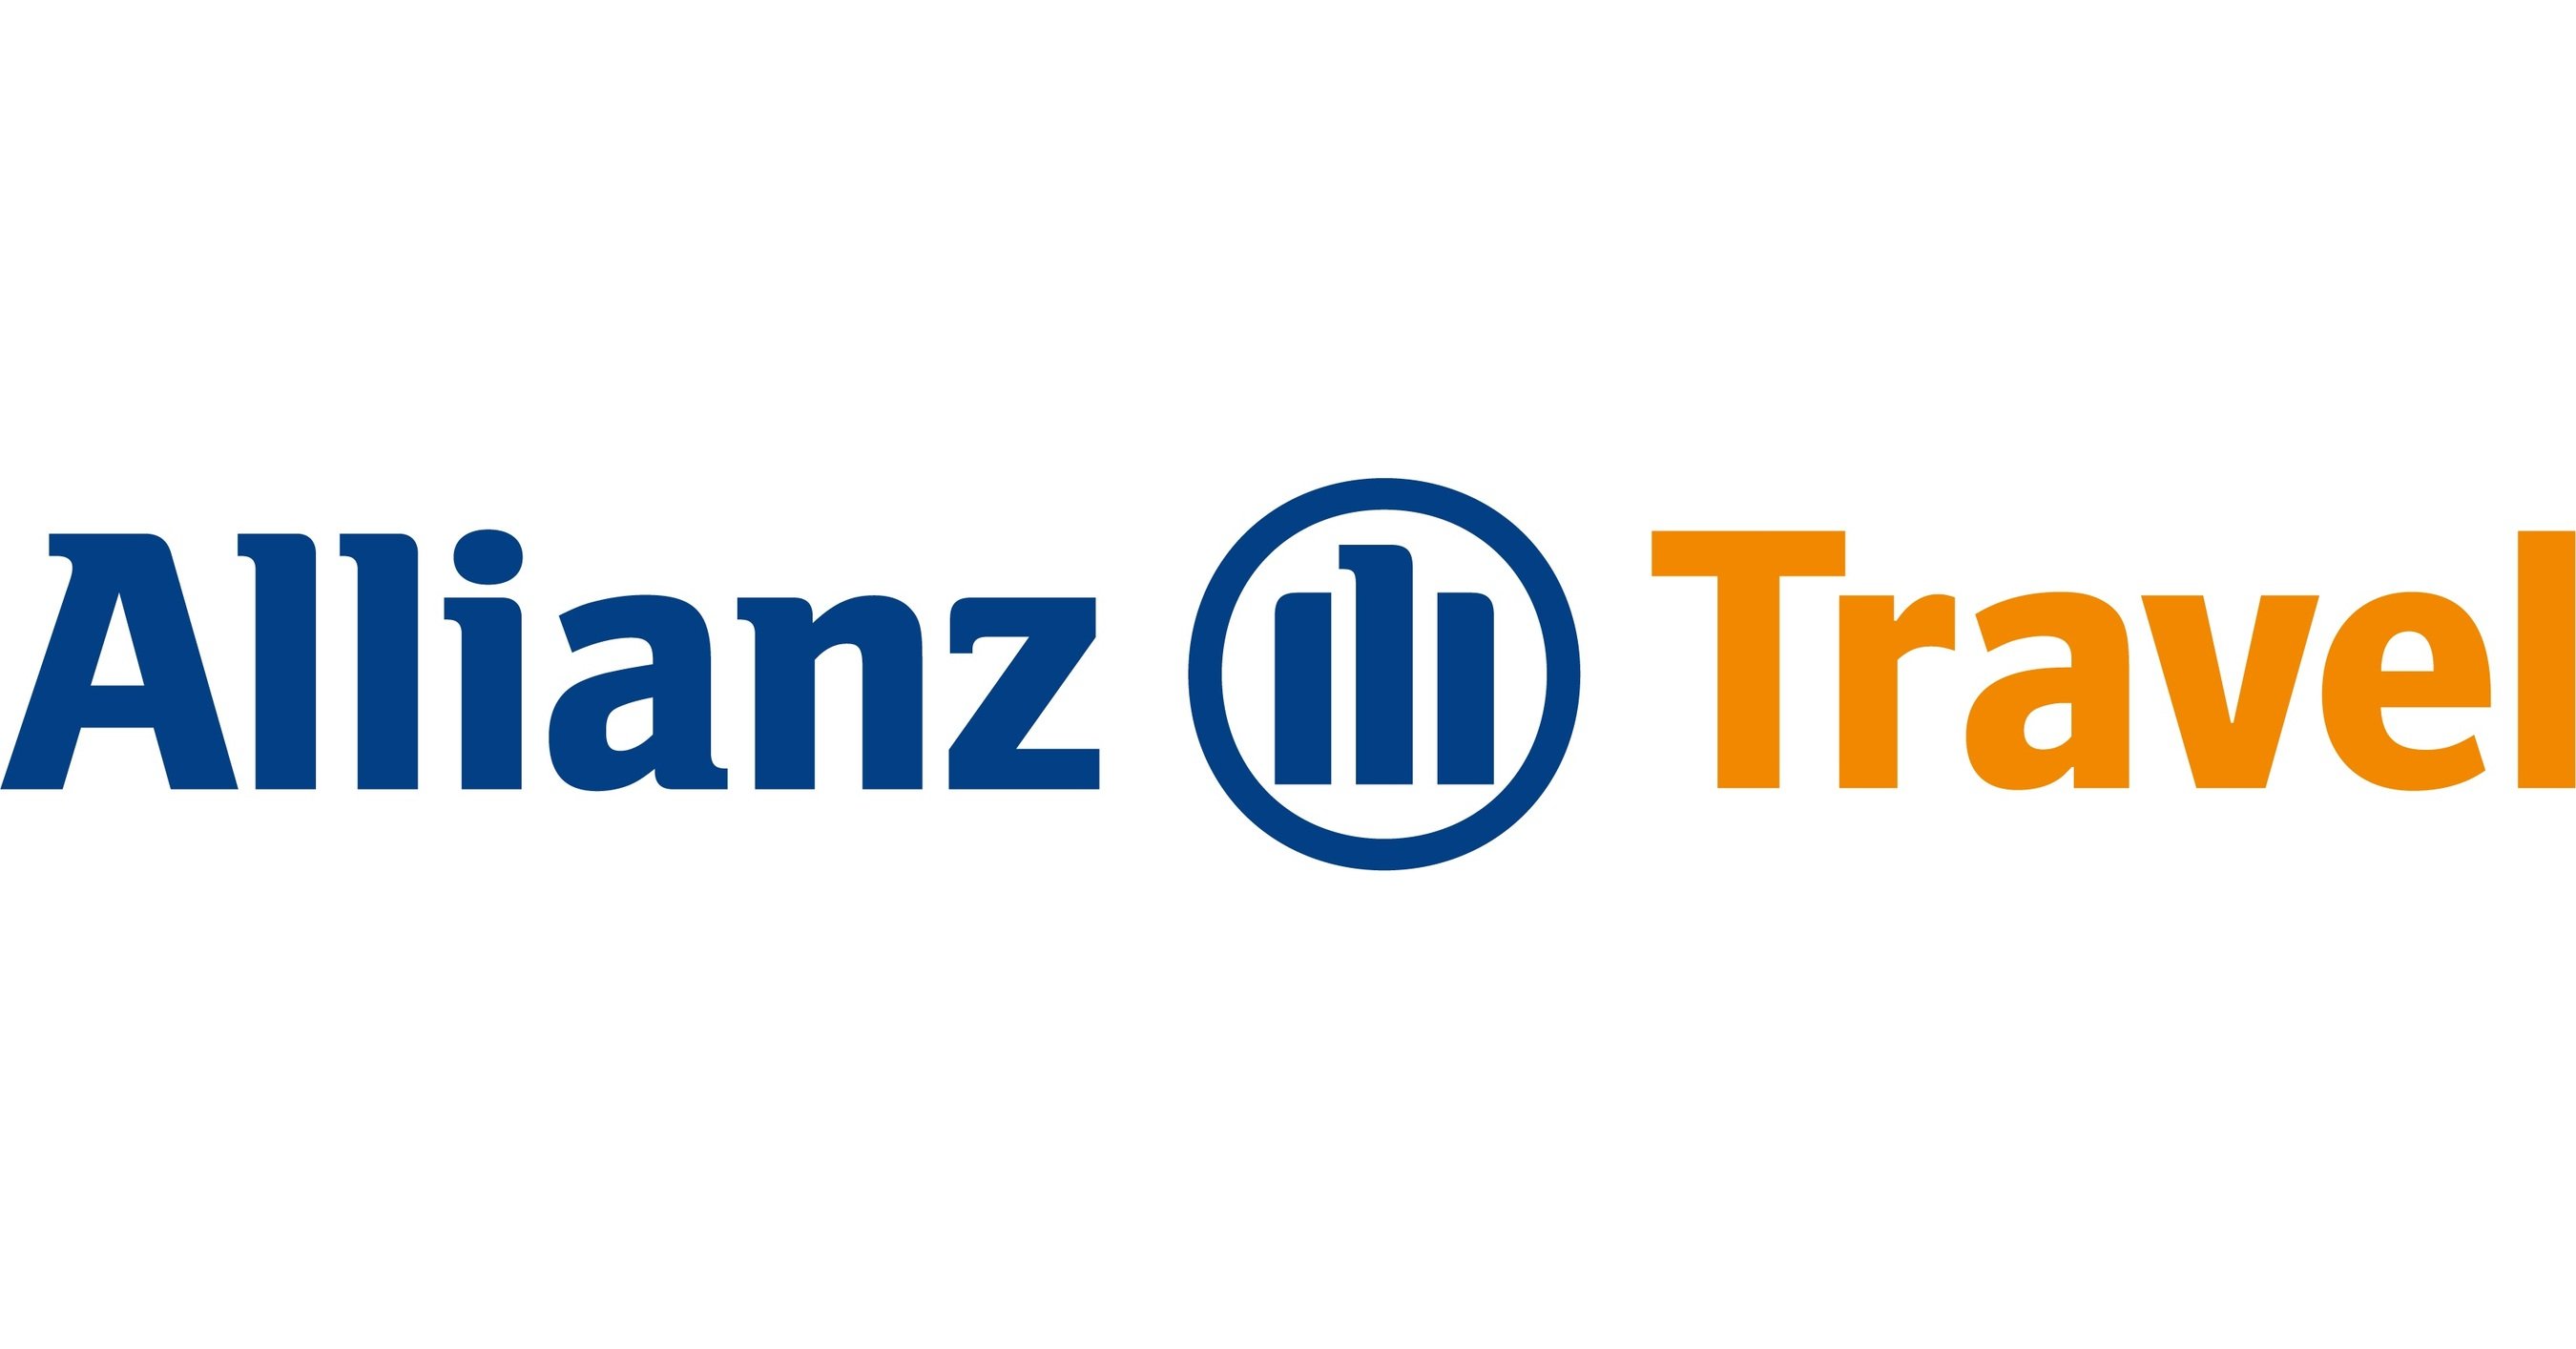 Allianz Travel Insurance logo